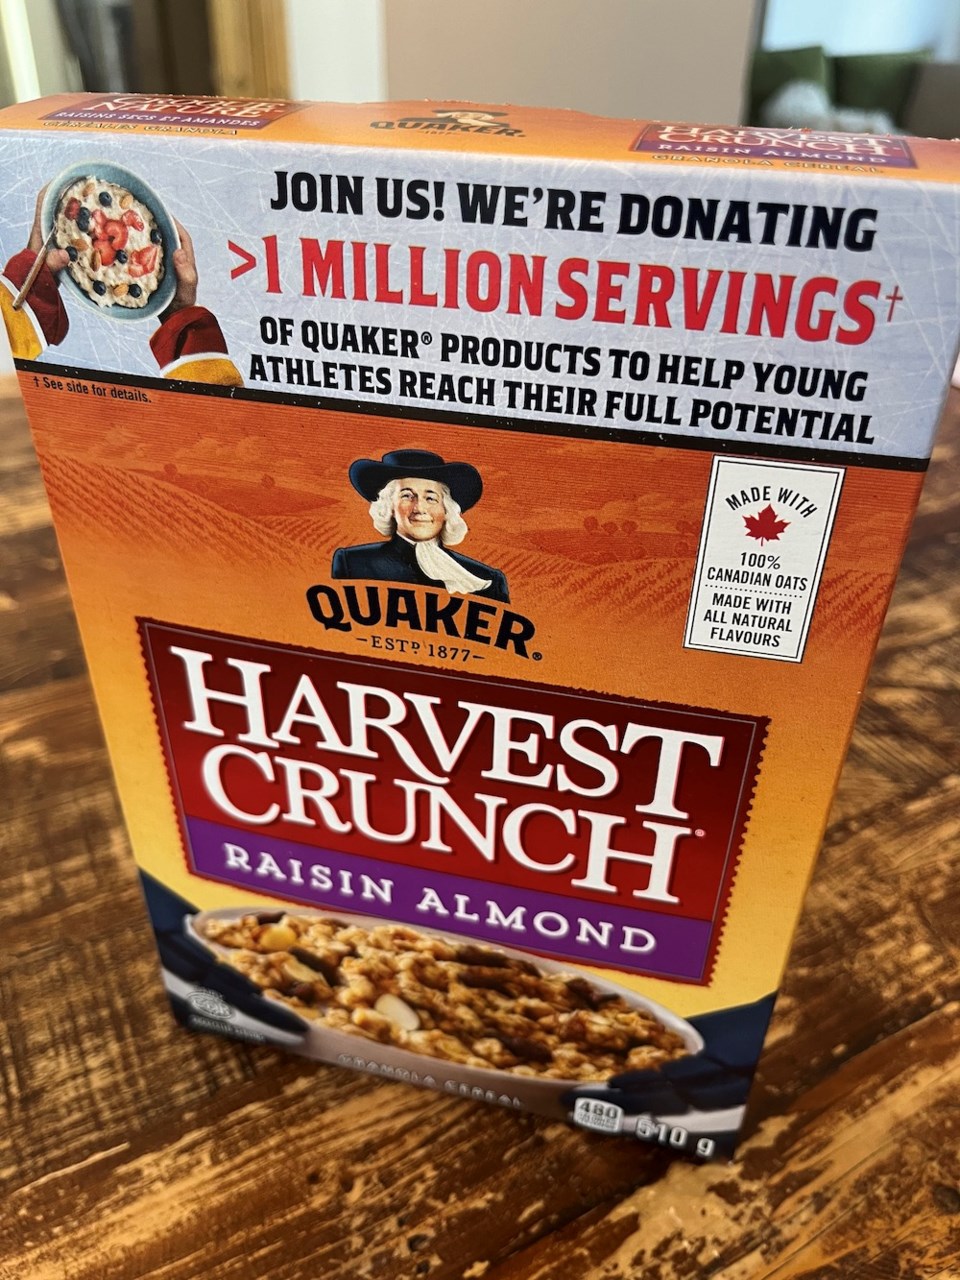 Quaker cereals and granola bars recalled due to possible salmonella